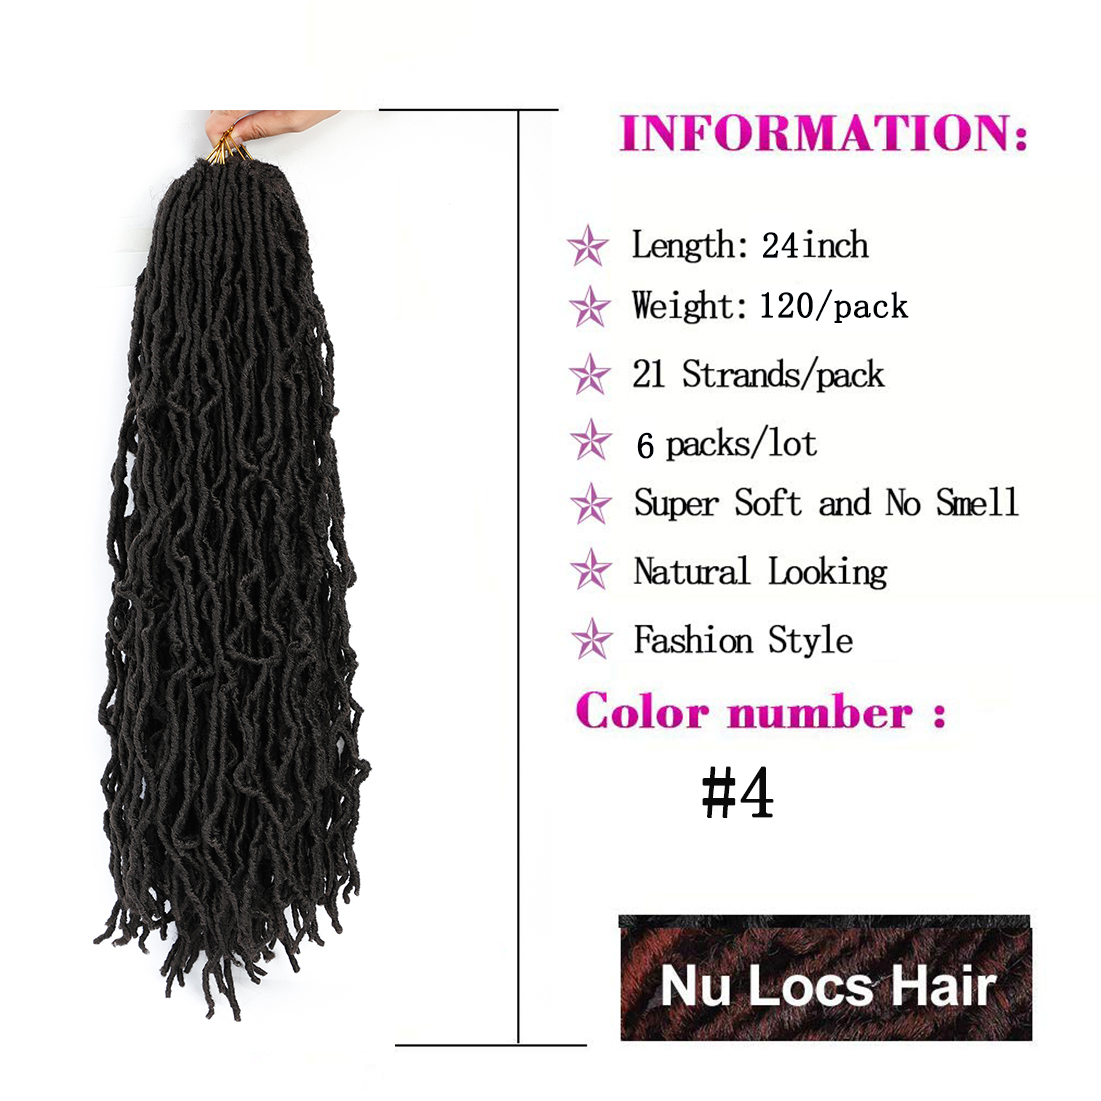 I&K Nu Faux Locs Hair 6 packs 24 Inch - #4